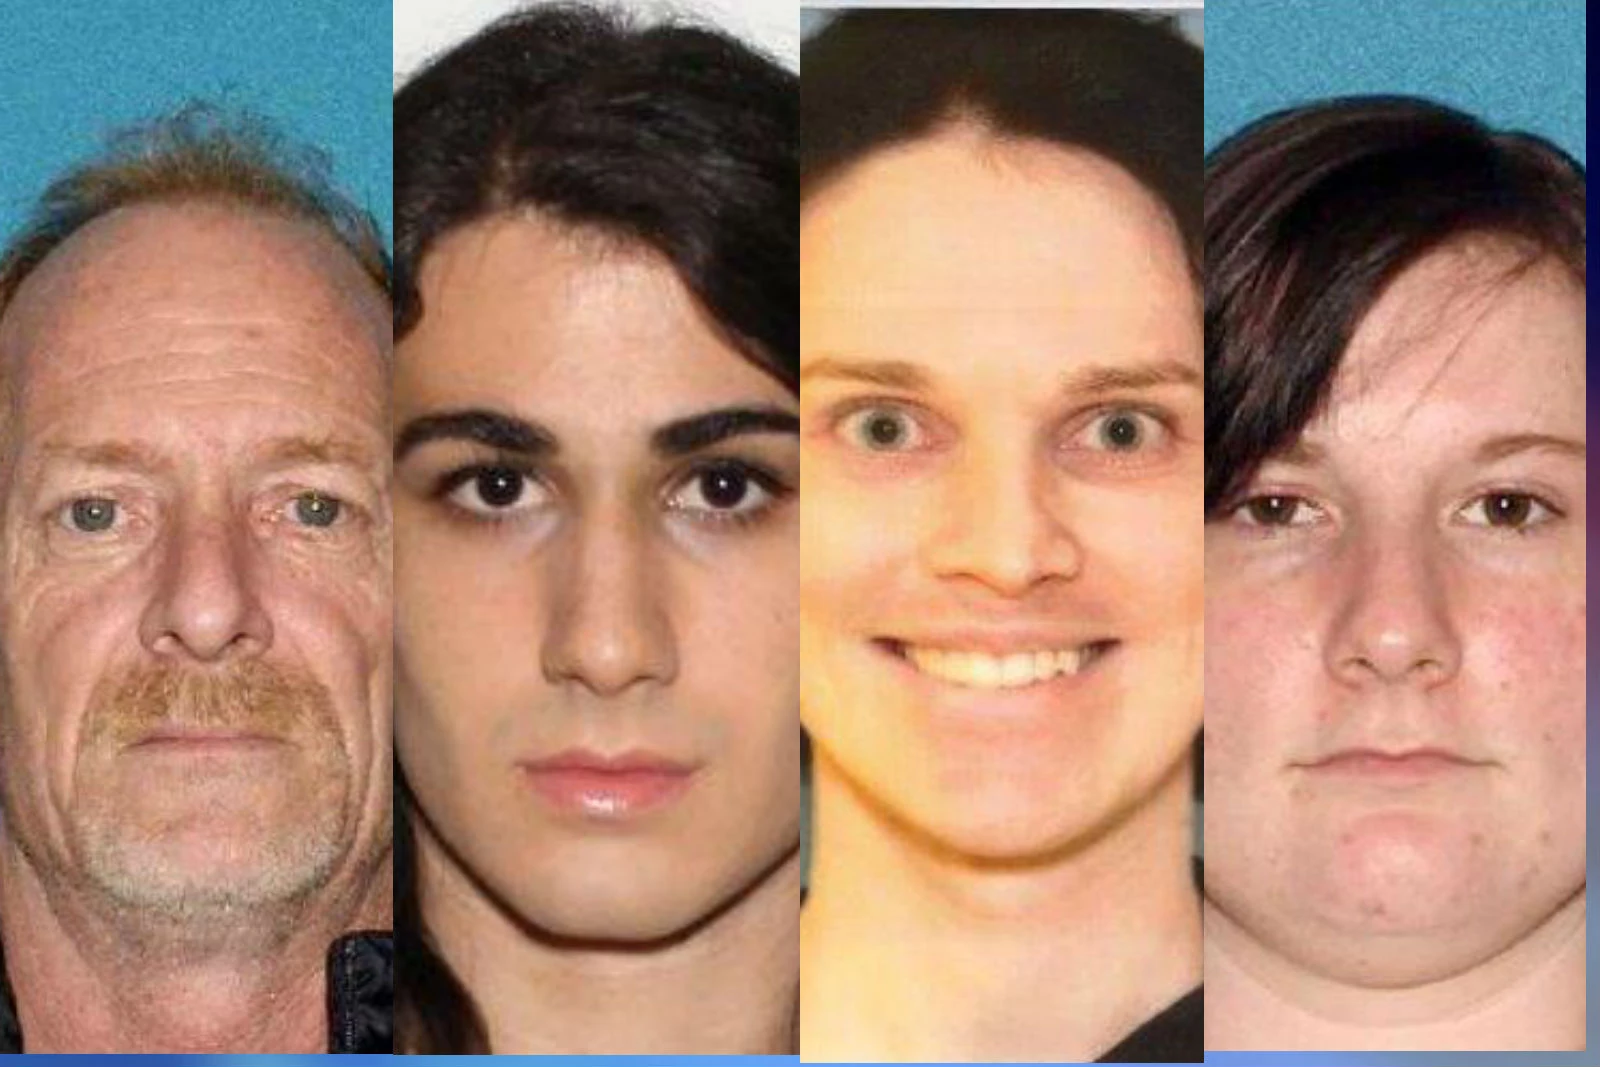 4 NJ adults sentenced for making child porn using defendants image